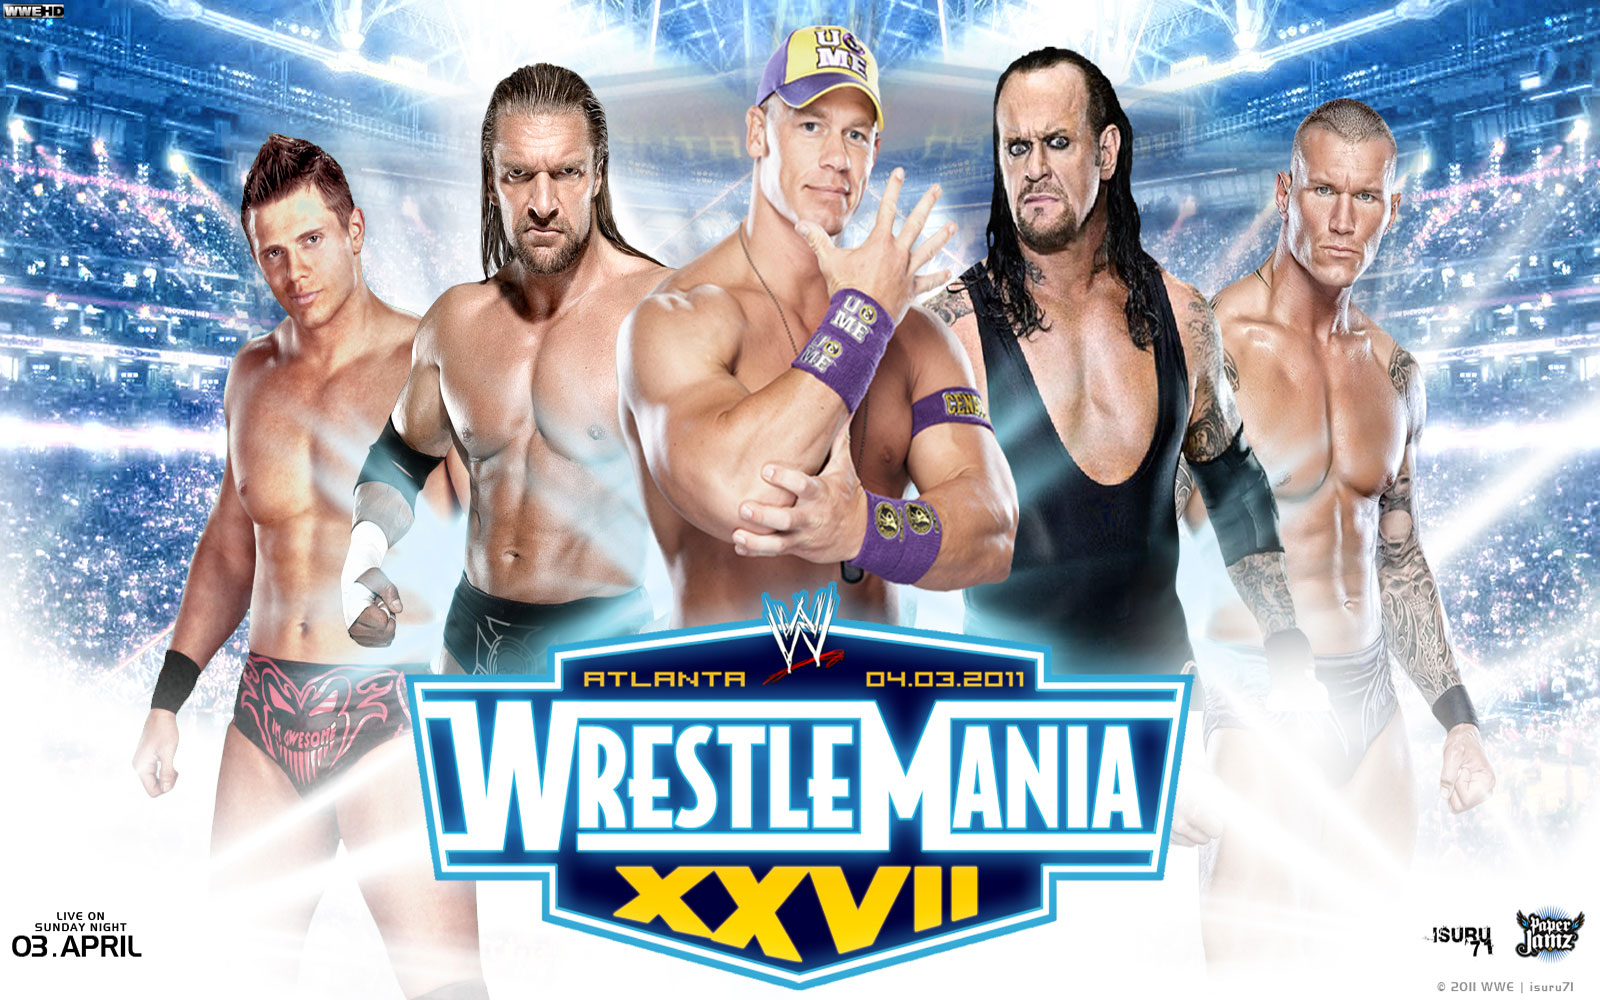 Wwe Wrestlemania Xxvii (2011) - HD Wallpaper 